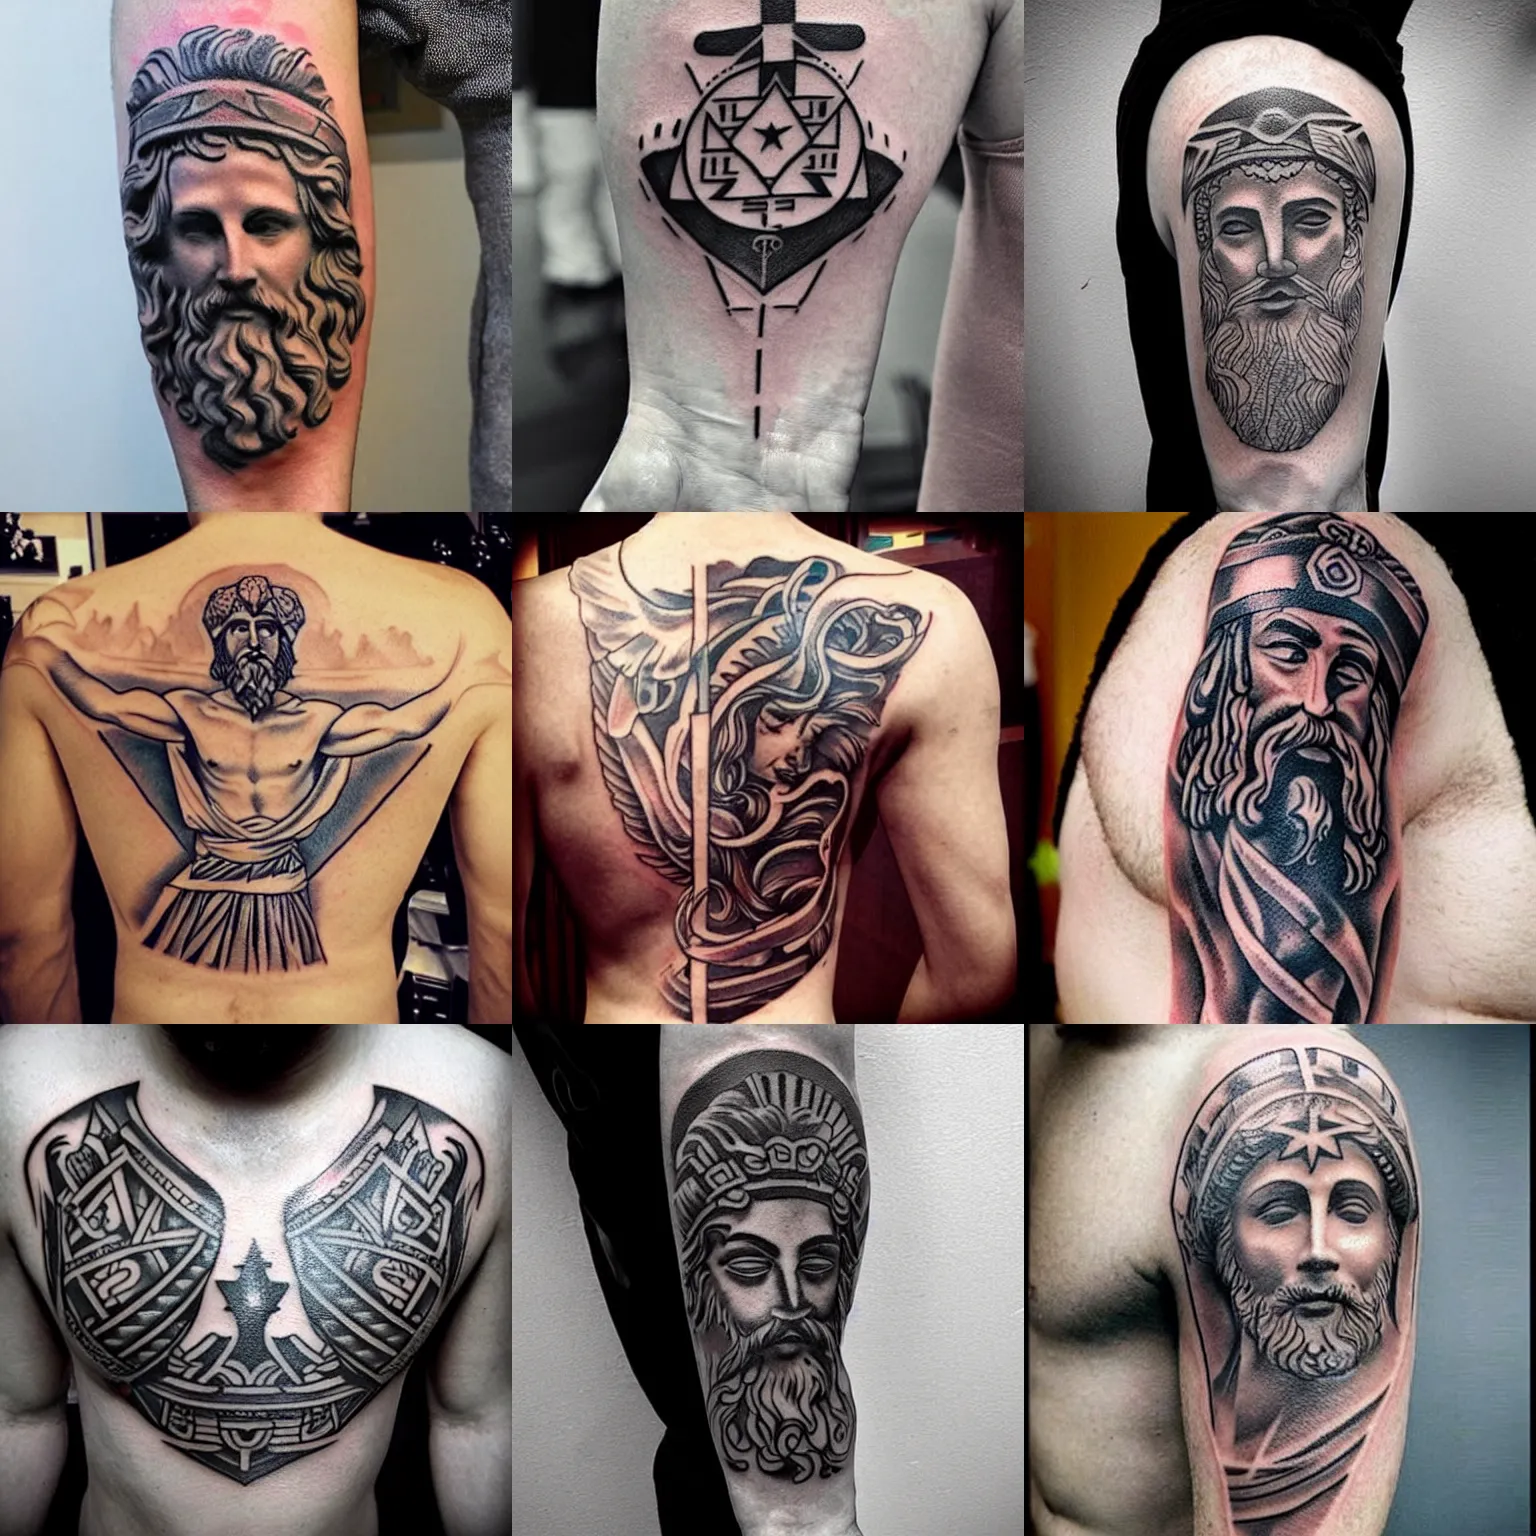 Greek Mythology Tattoos | GET a custom Tattoo design 100% ONLINE